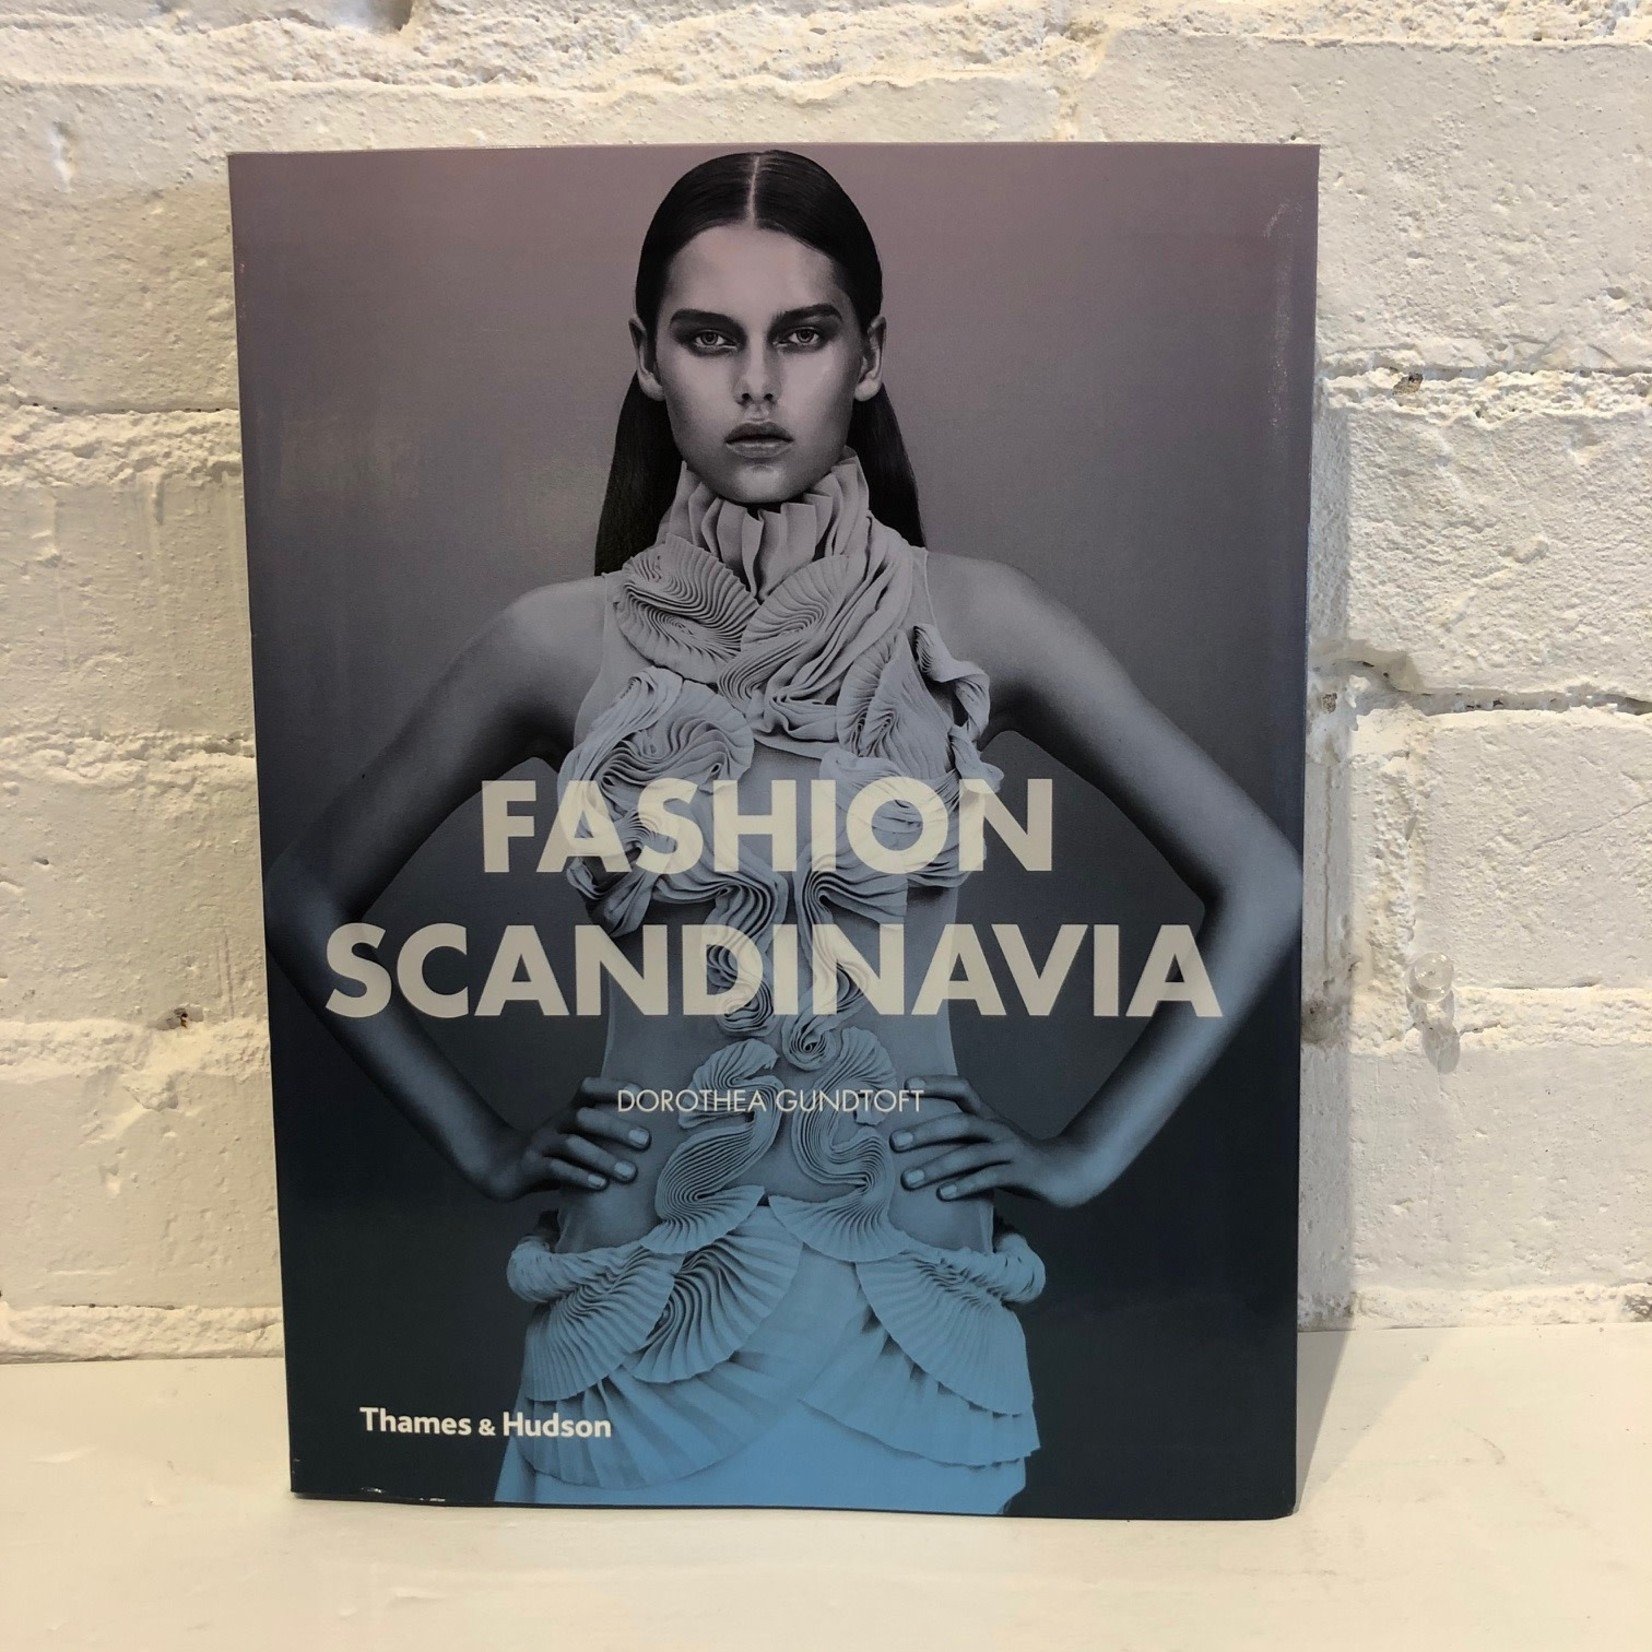 Fashion Scandinavia by Dorothea Gundtoft